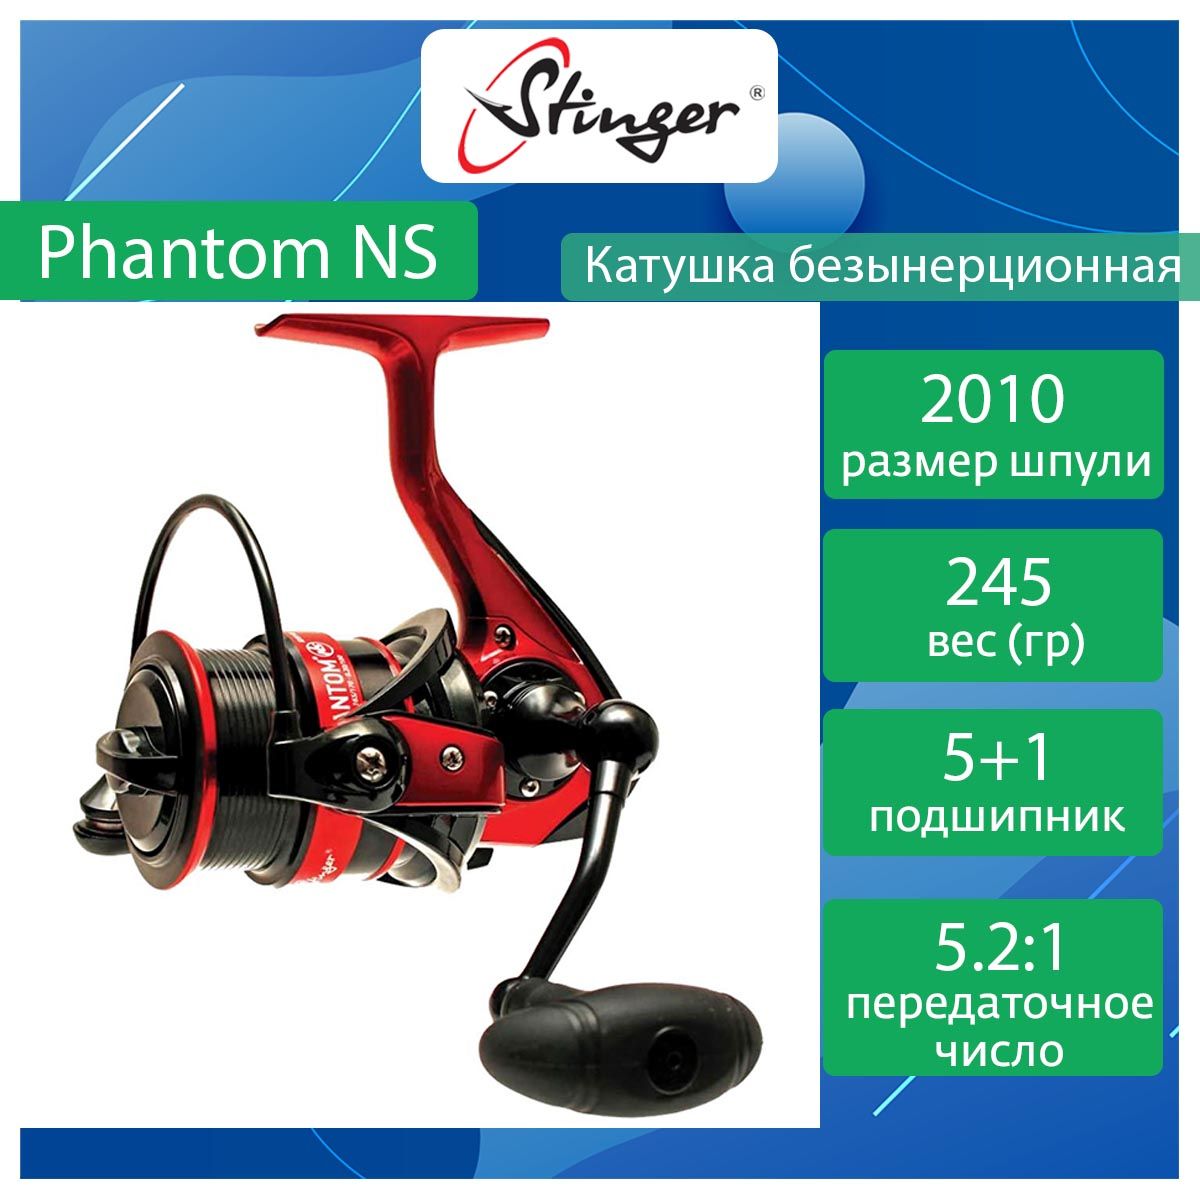 Катушка для рыбалки безынерционная Stinger Phantom NS ef53281